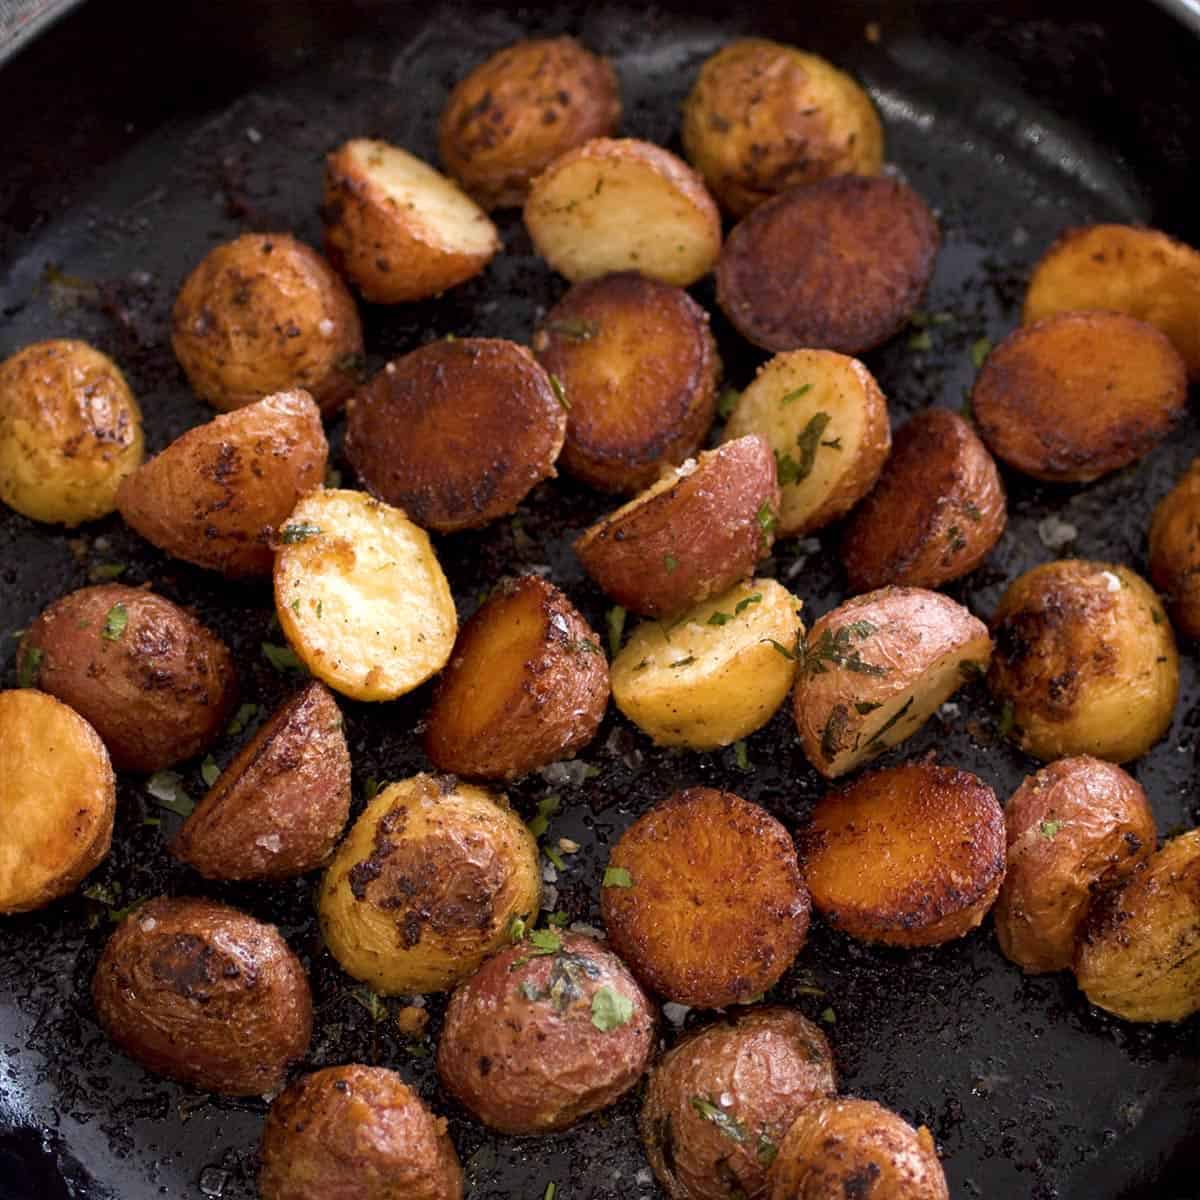 https://sundaysuppermovement.com/wp-content/uploads/2020/11/roasted-small-potatoes-2.jpg